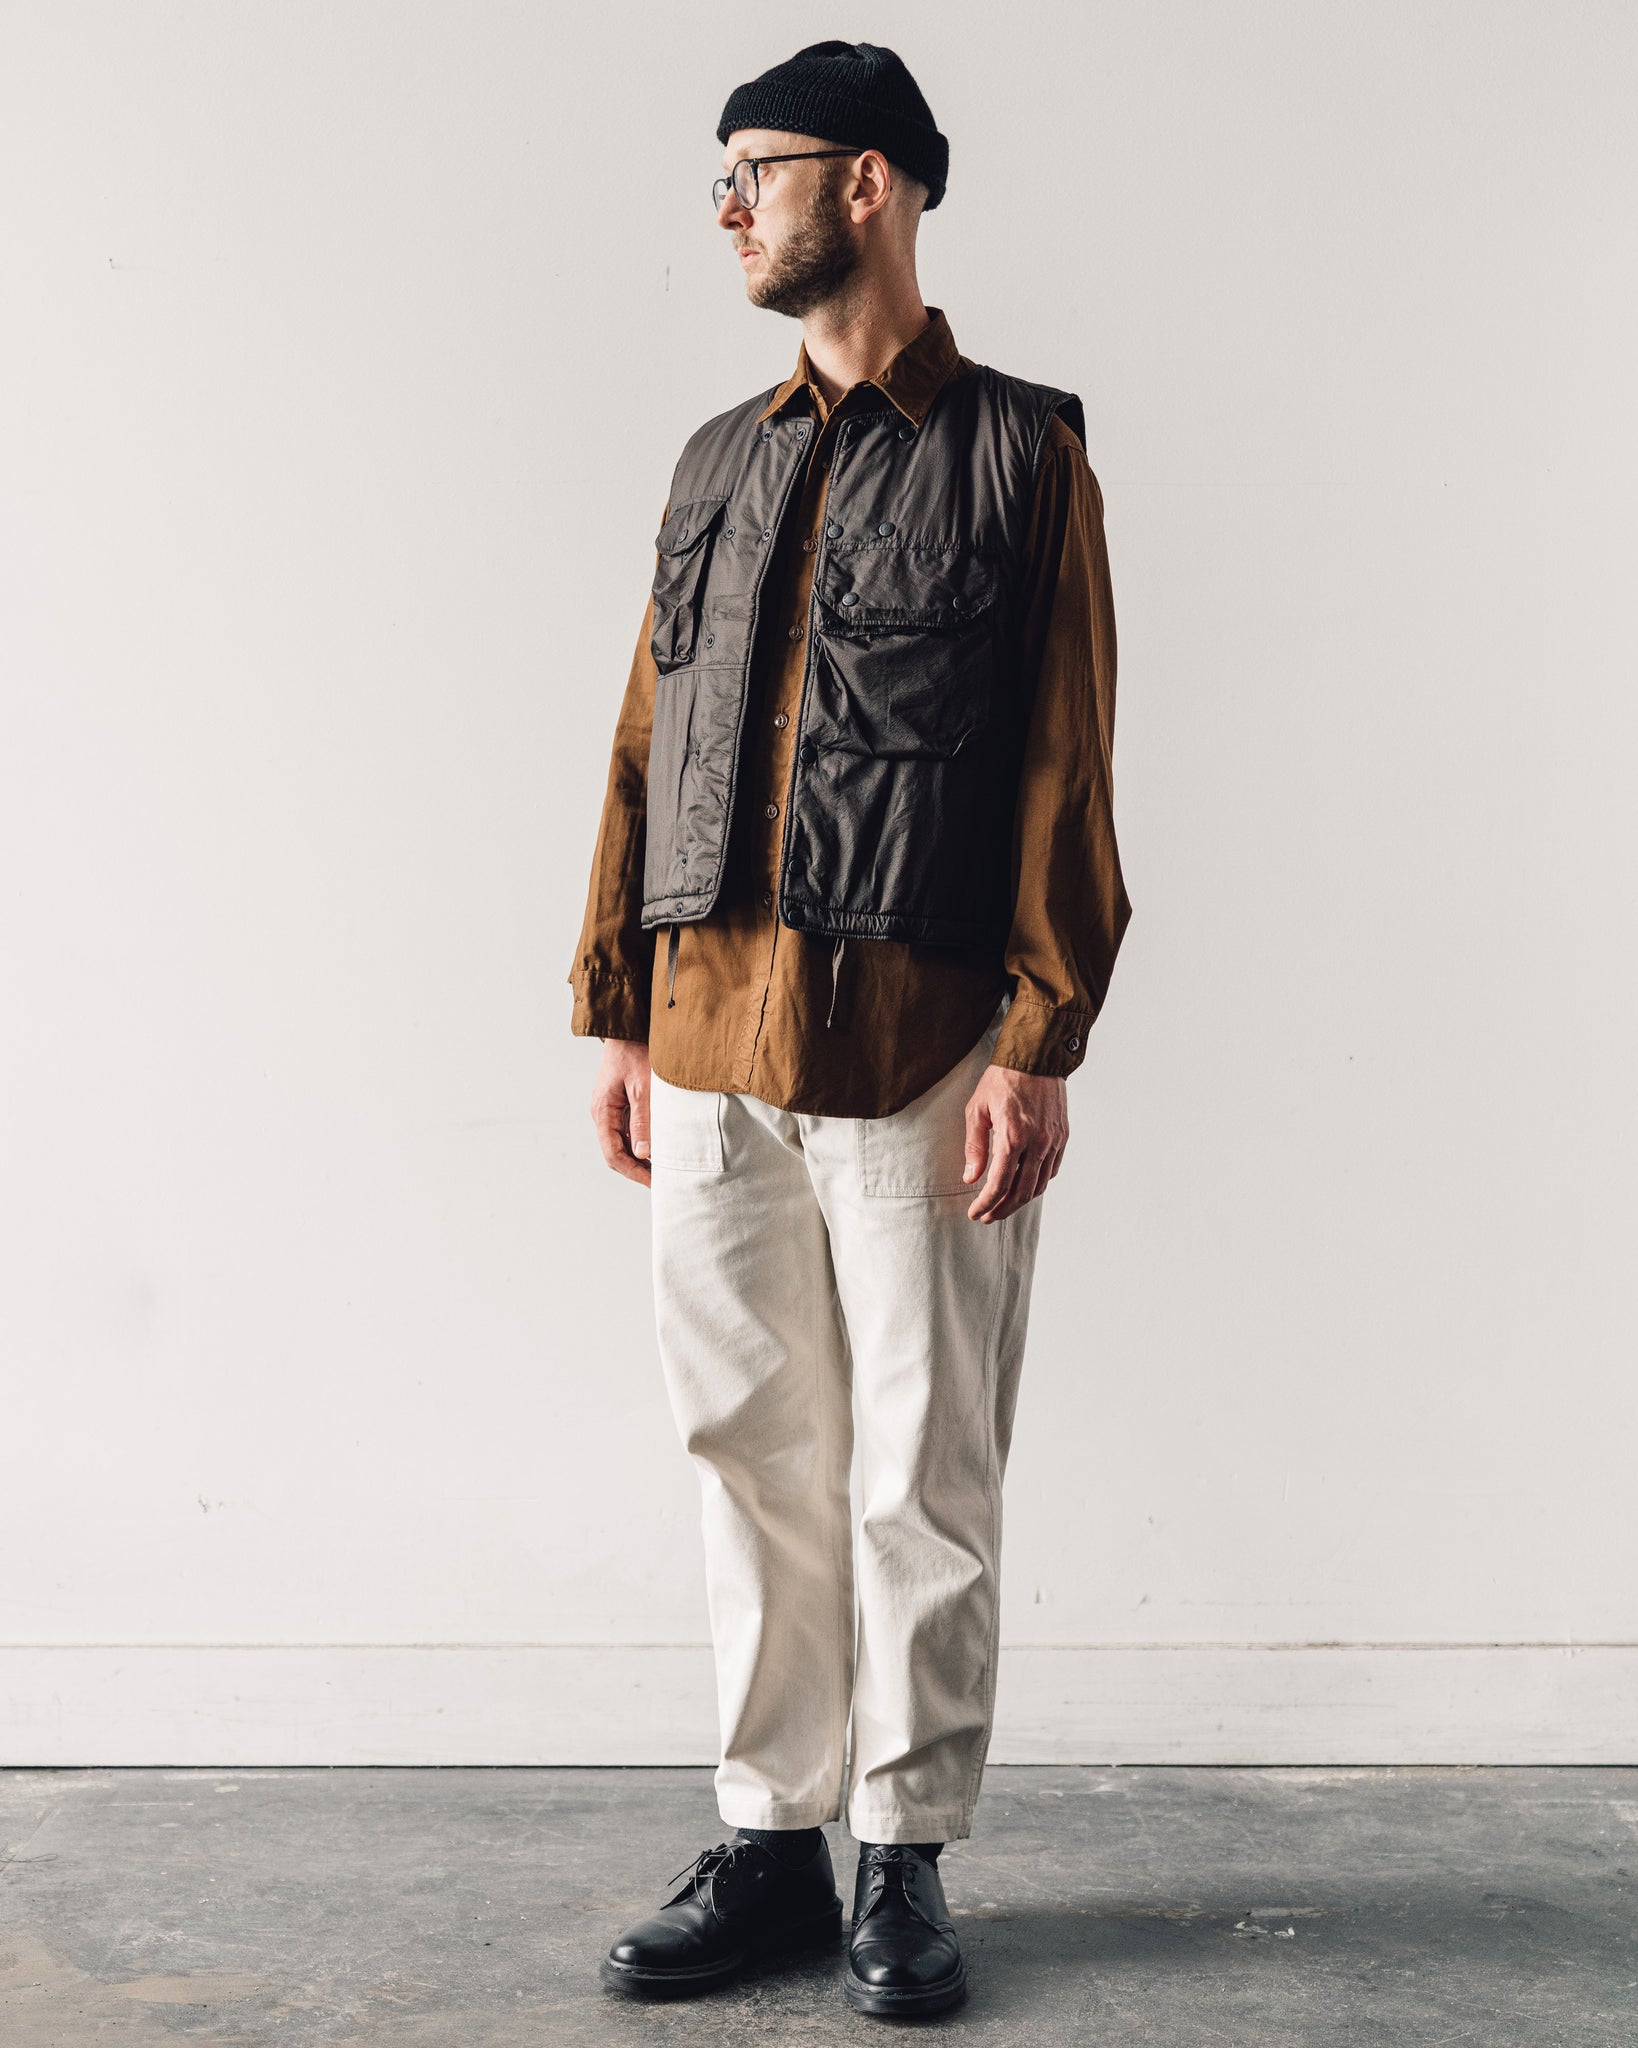 Engineered Garments Cover Vest, Brown